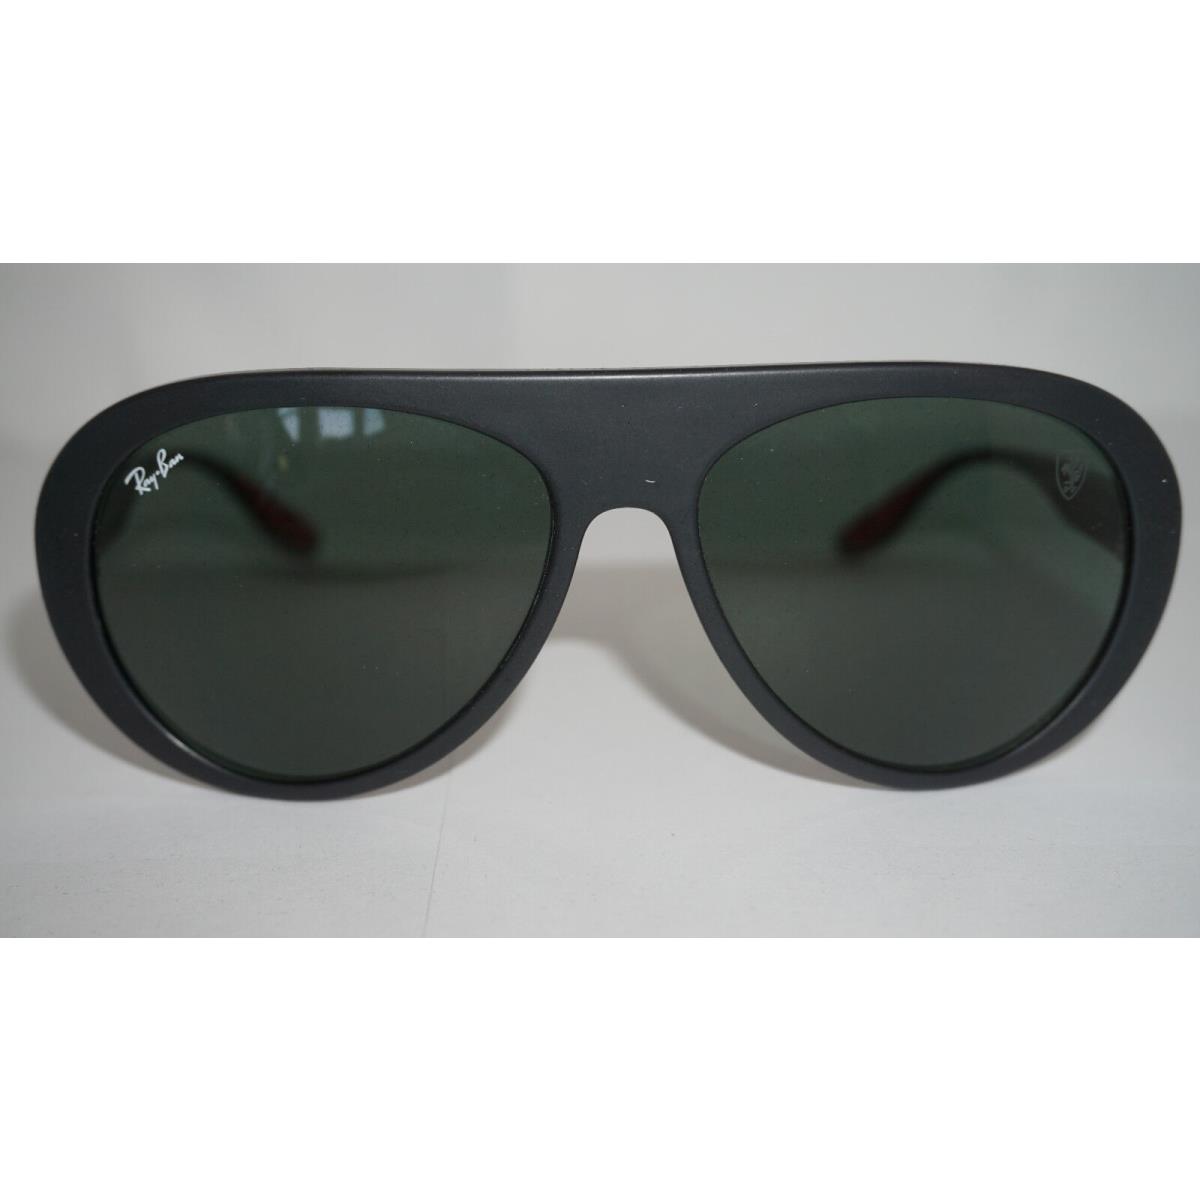 Ray-Ban sunglasses  - Black Frame, Green Classic Lens 1